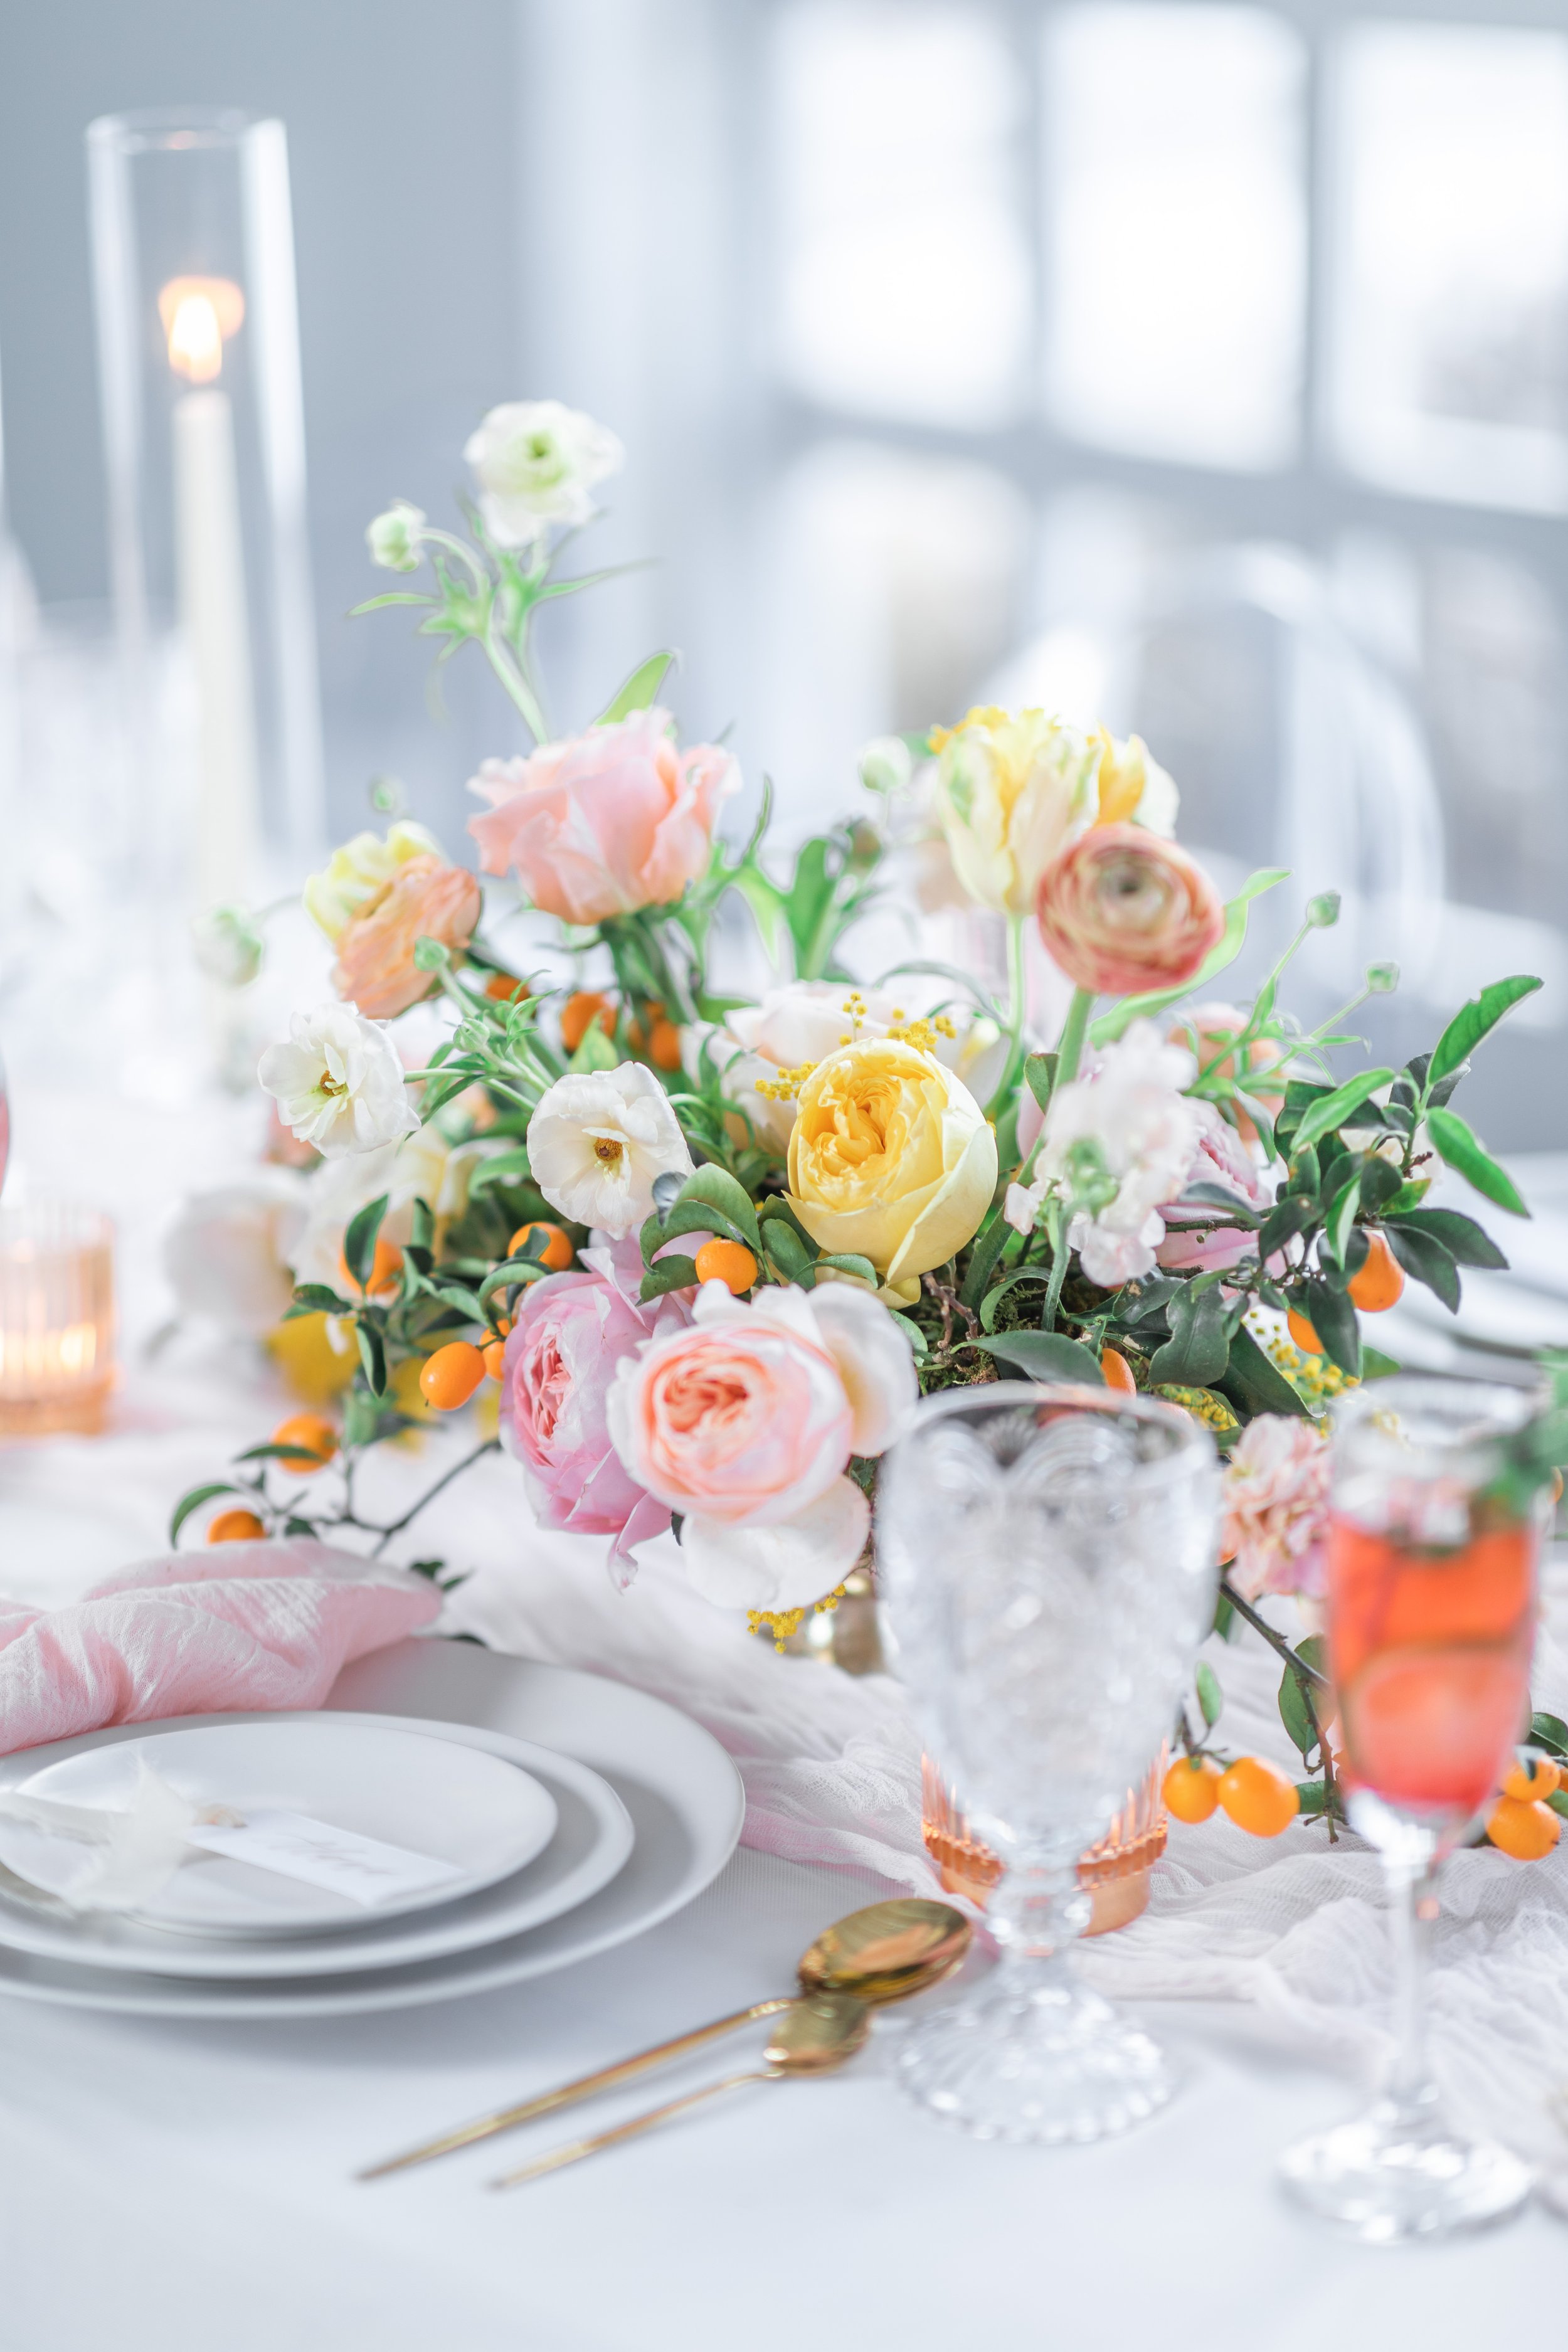  Savanna Richardson Photography captures a spring-inspired wedding table with a pink and yellow centerpiece. floral centerpiece glass goblet #savannarichardsonphotography #utahvendor #utahweddingphotographer #MilleFleurDesign #Utahweddingdesigns 